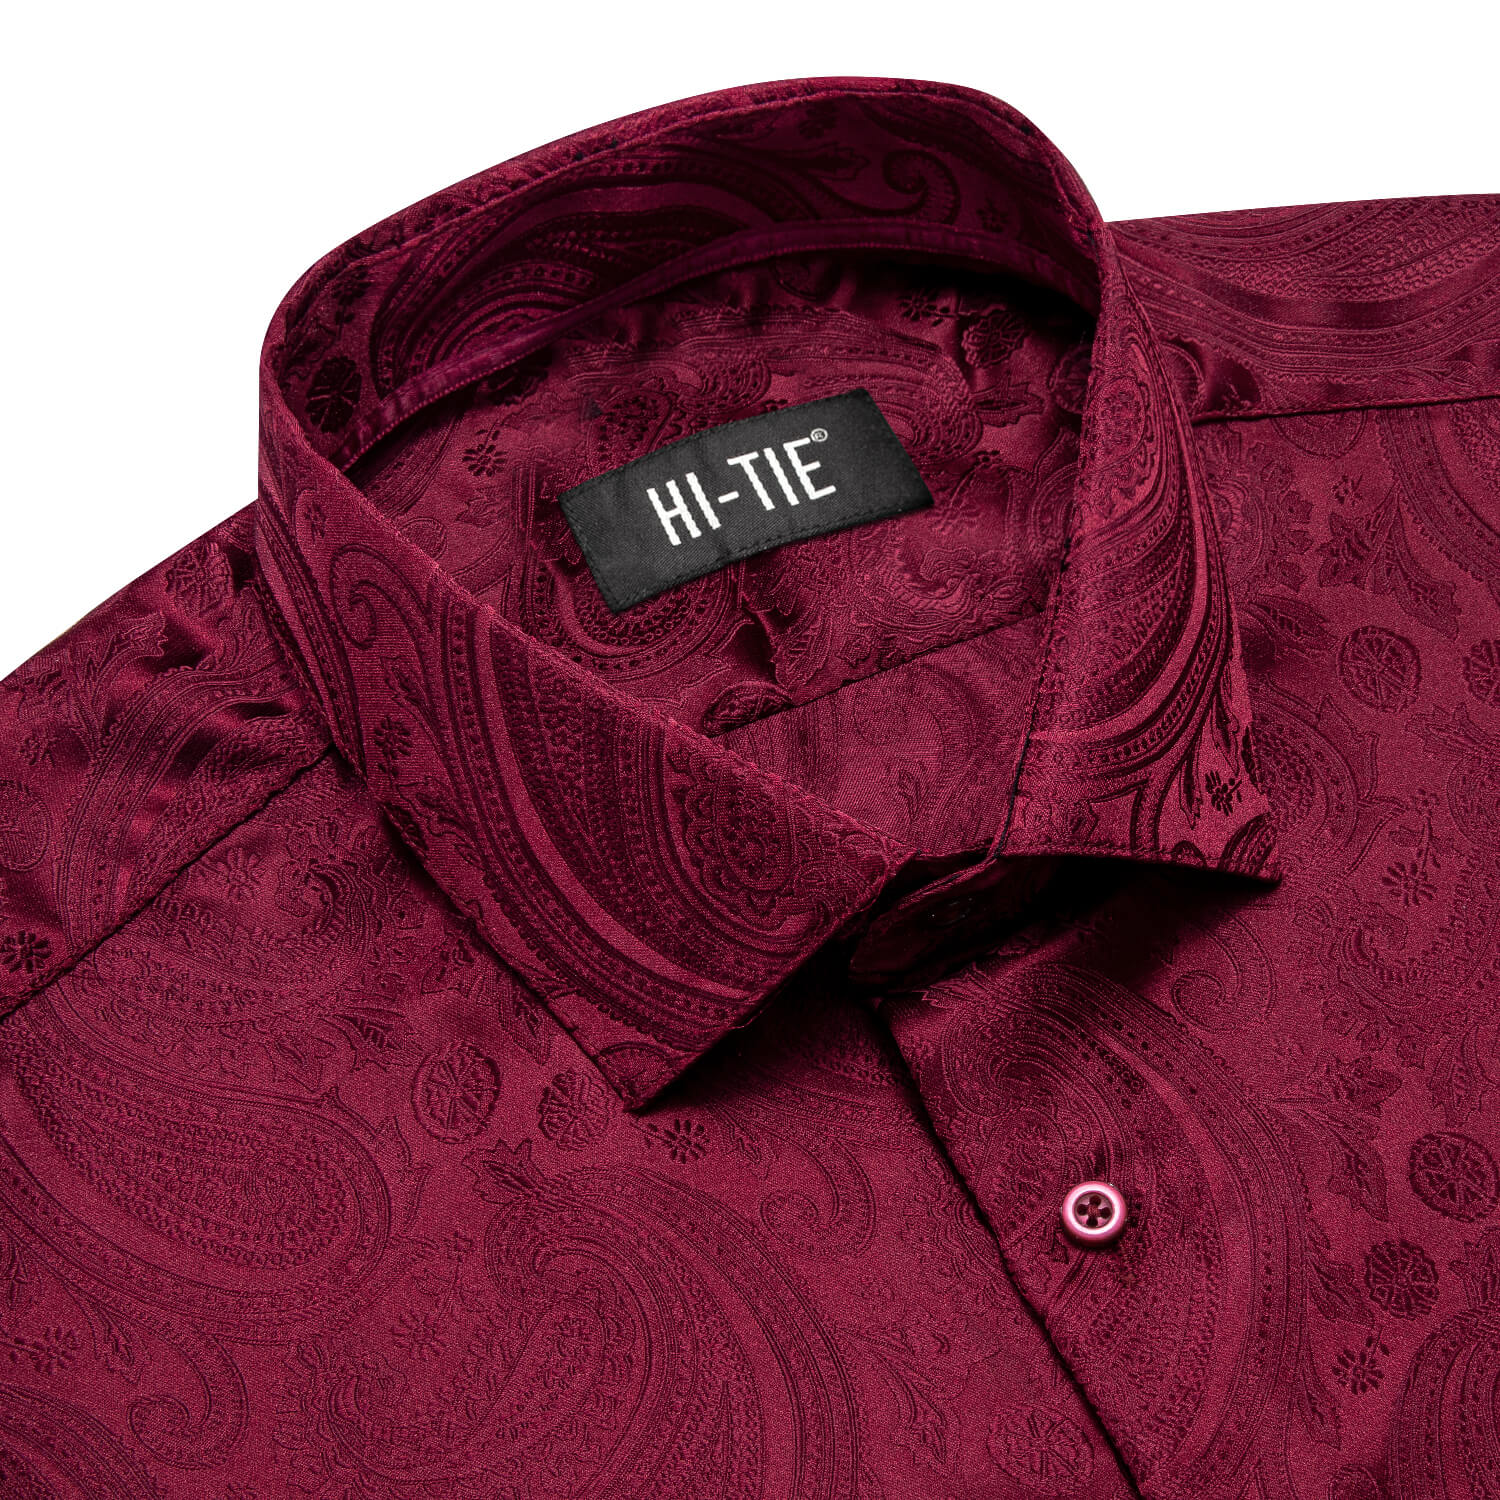 Hi-Tie Button Down Shirt Burgundy Red Woven Paisley Silk Men's Shirt